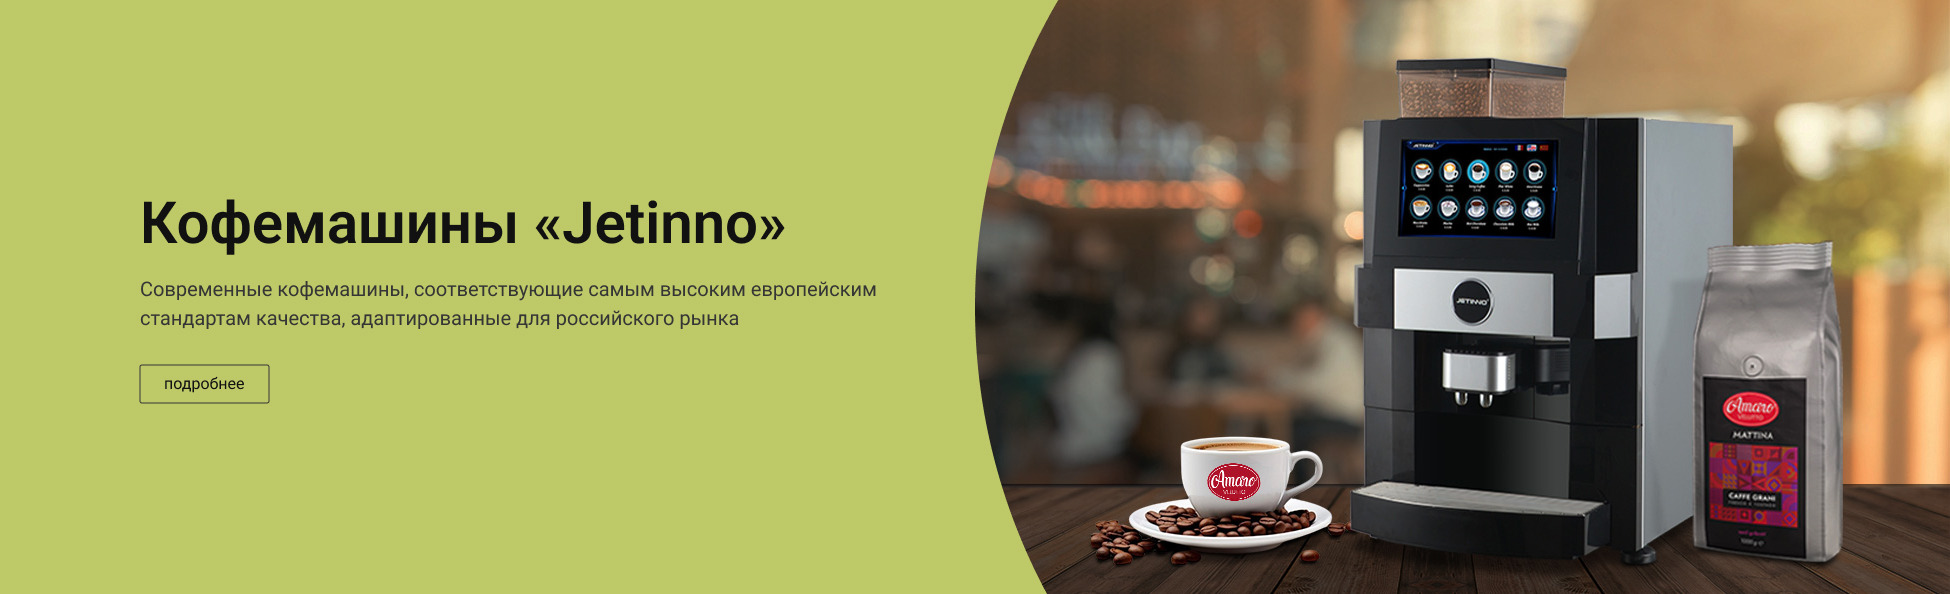 Кофемашины “Jetinno”